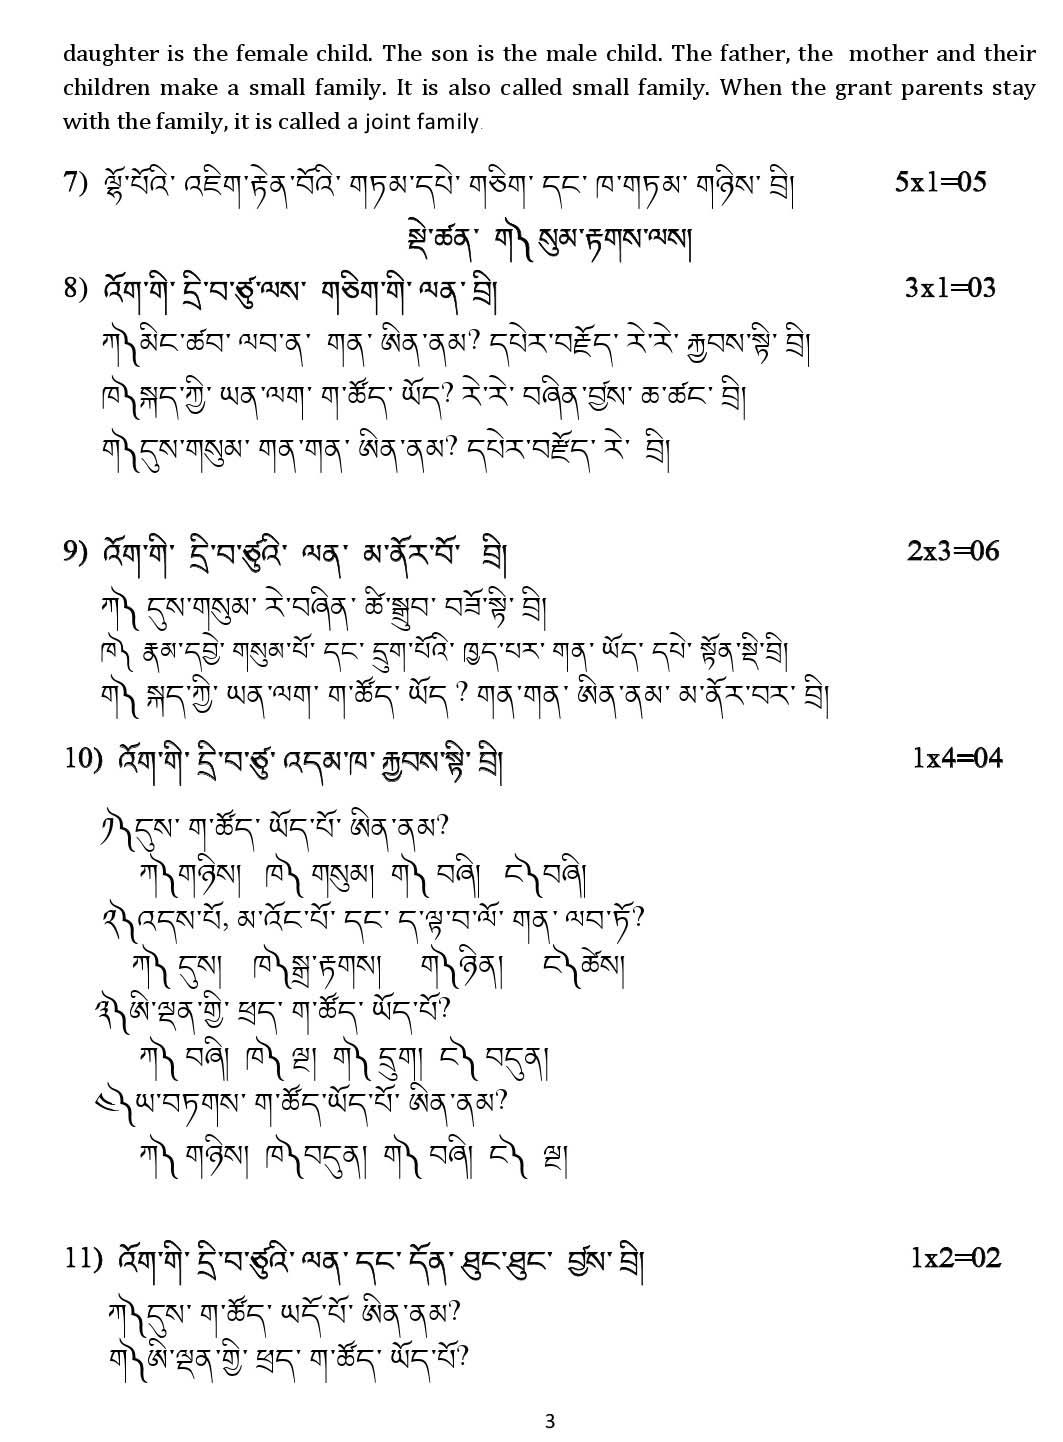 Bhutia CBSE Class X Sample Question Paper 2019 20 - Image 3